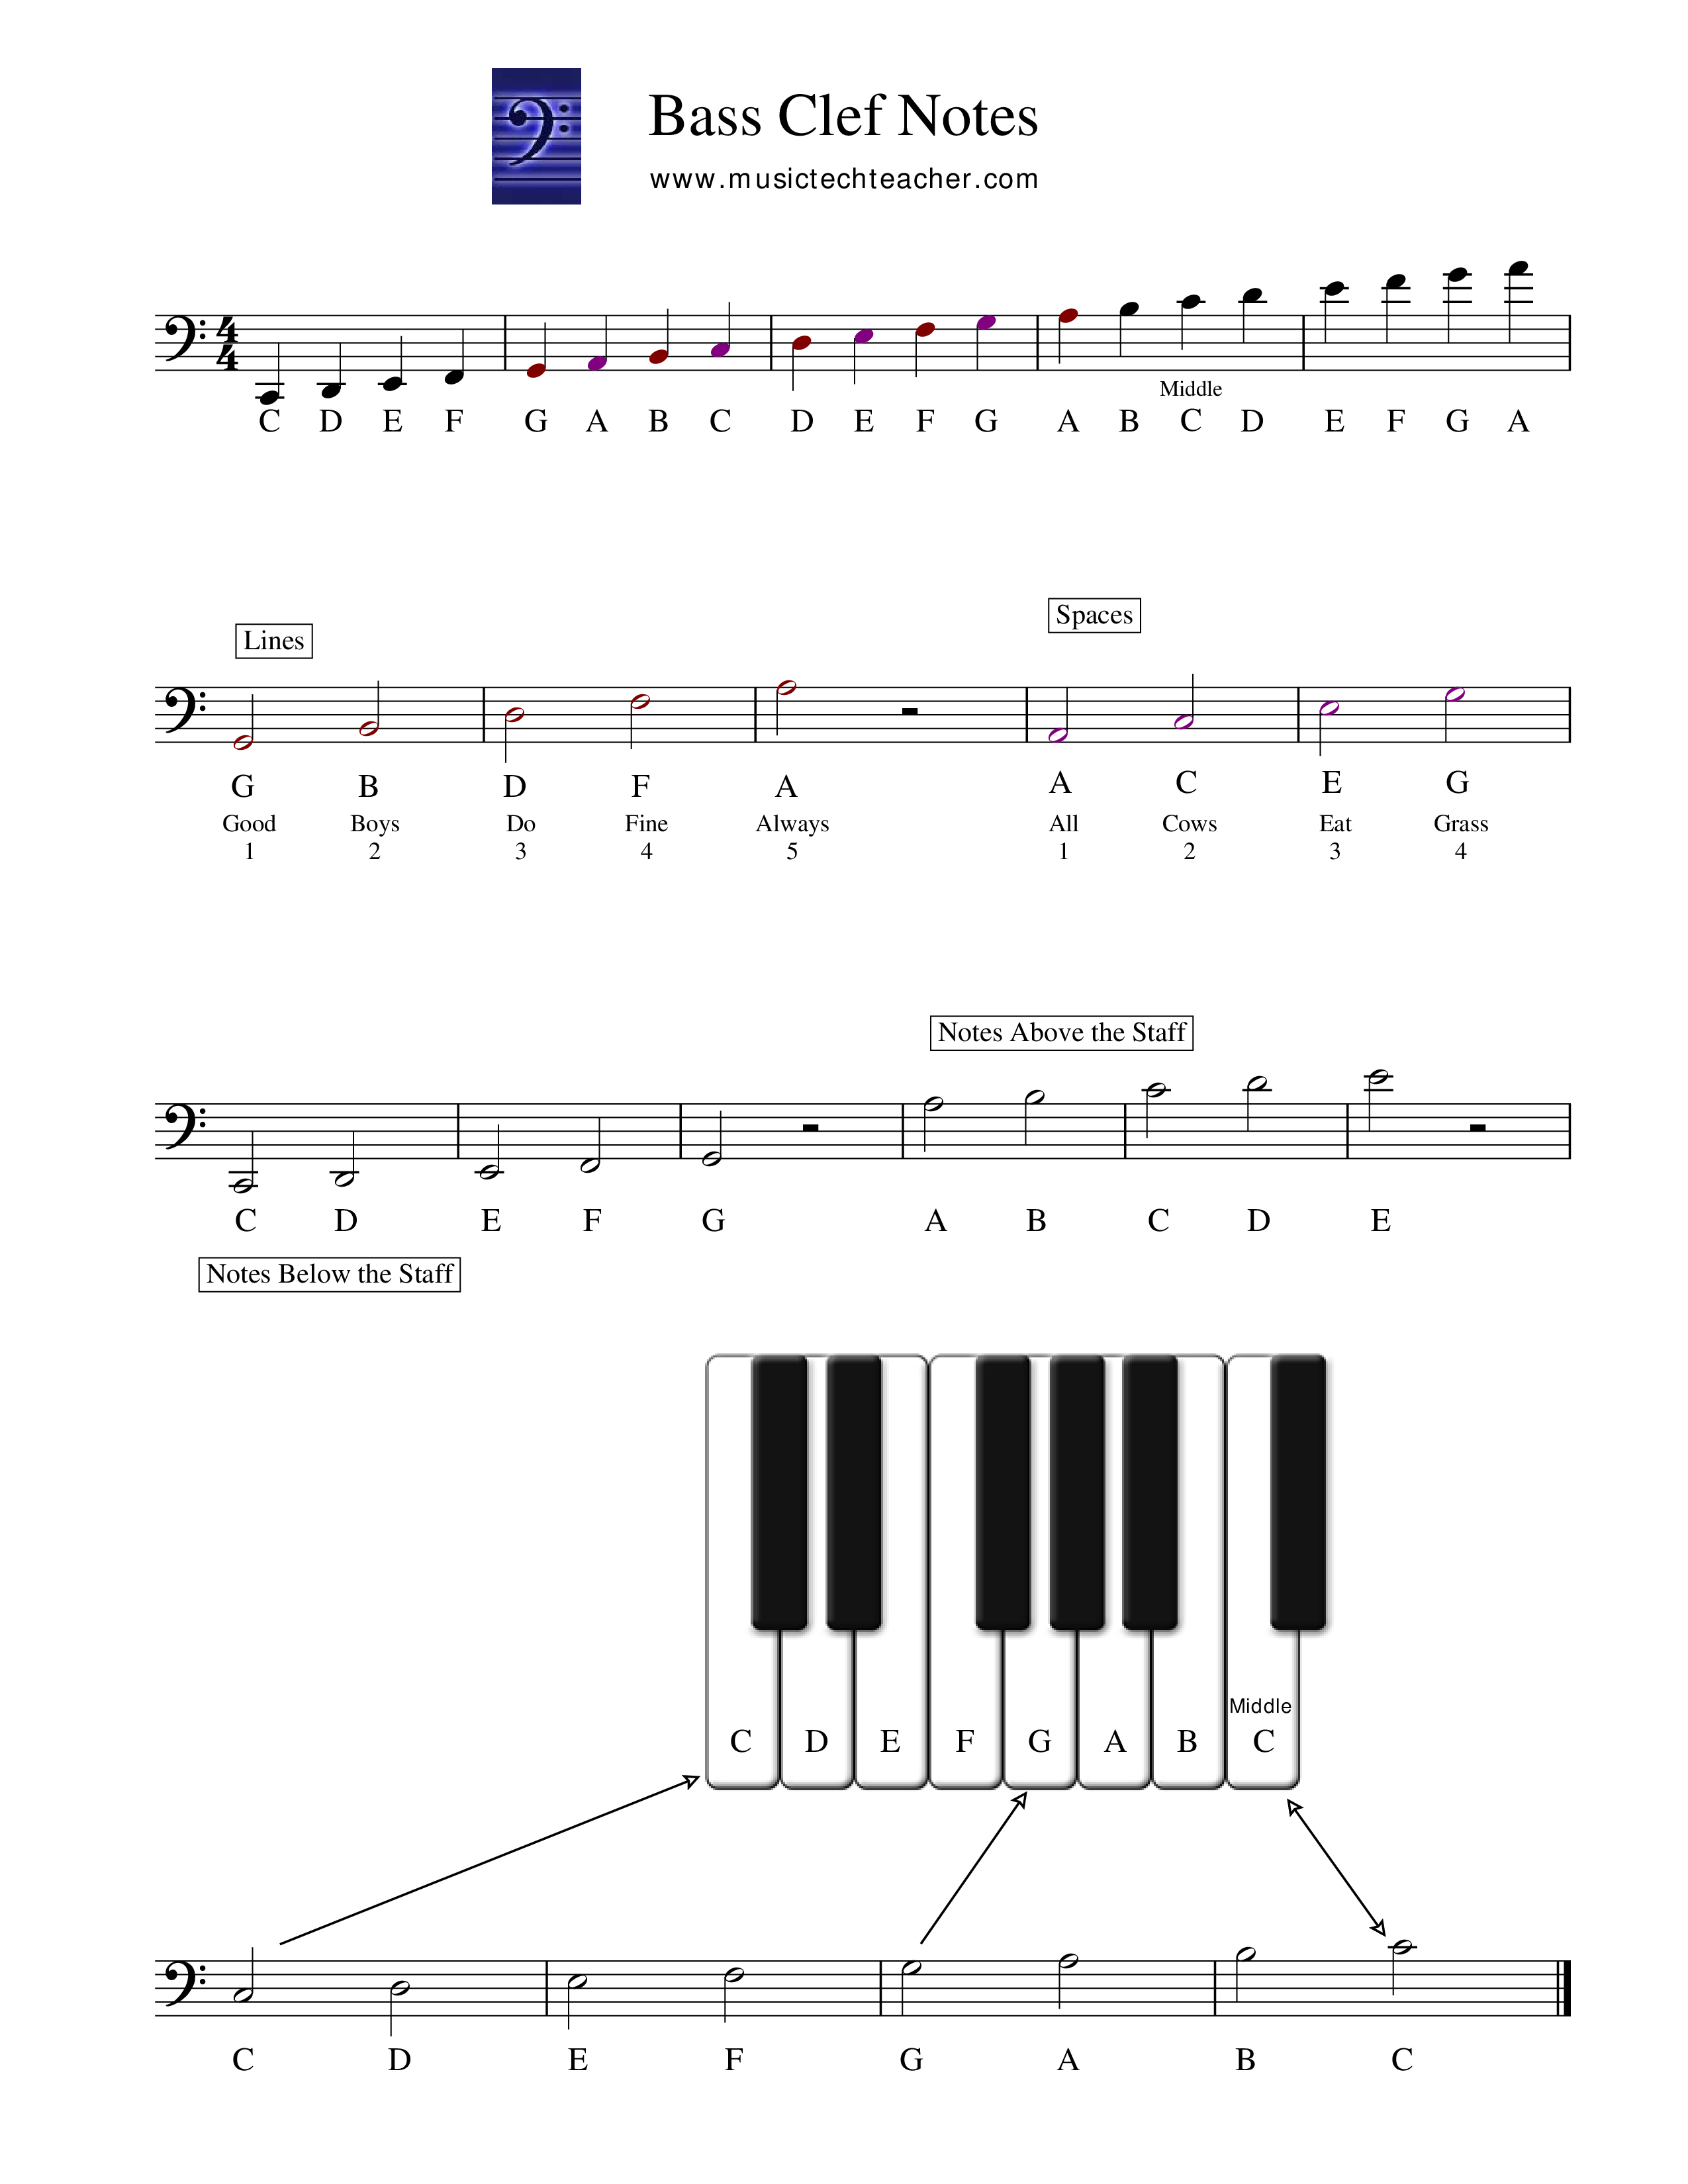 piano bass notes chart plantilla imagen principal